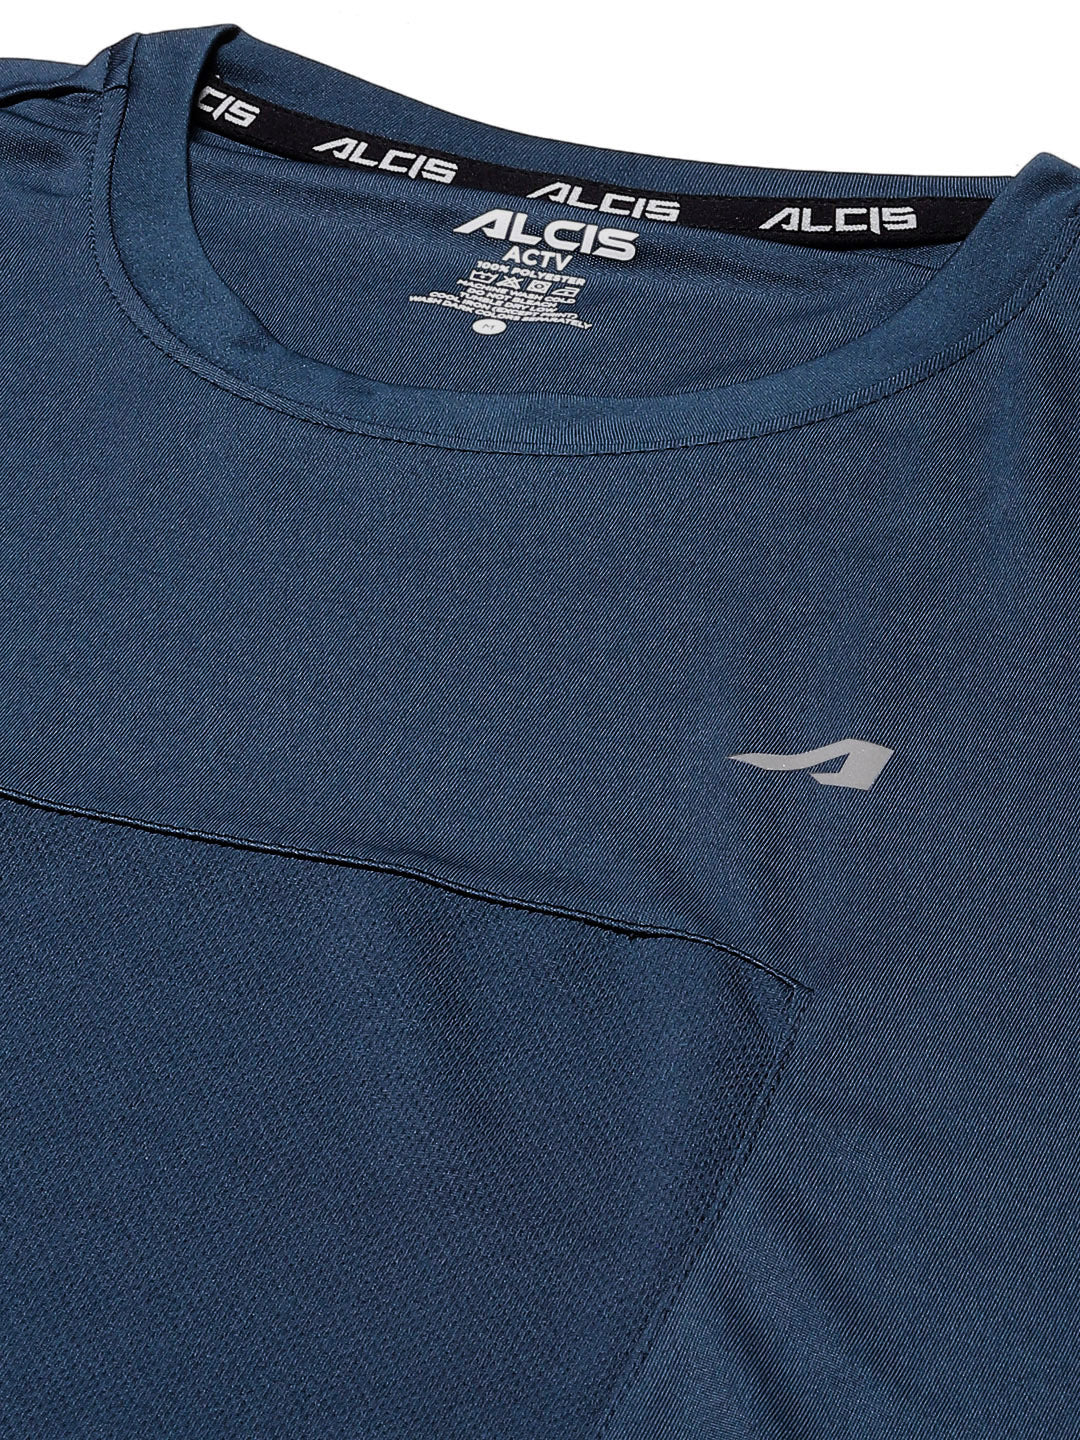 Alcis Men Navy Blue Solid T-shirt